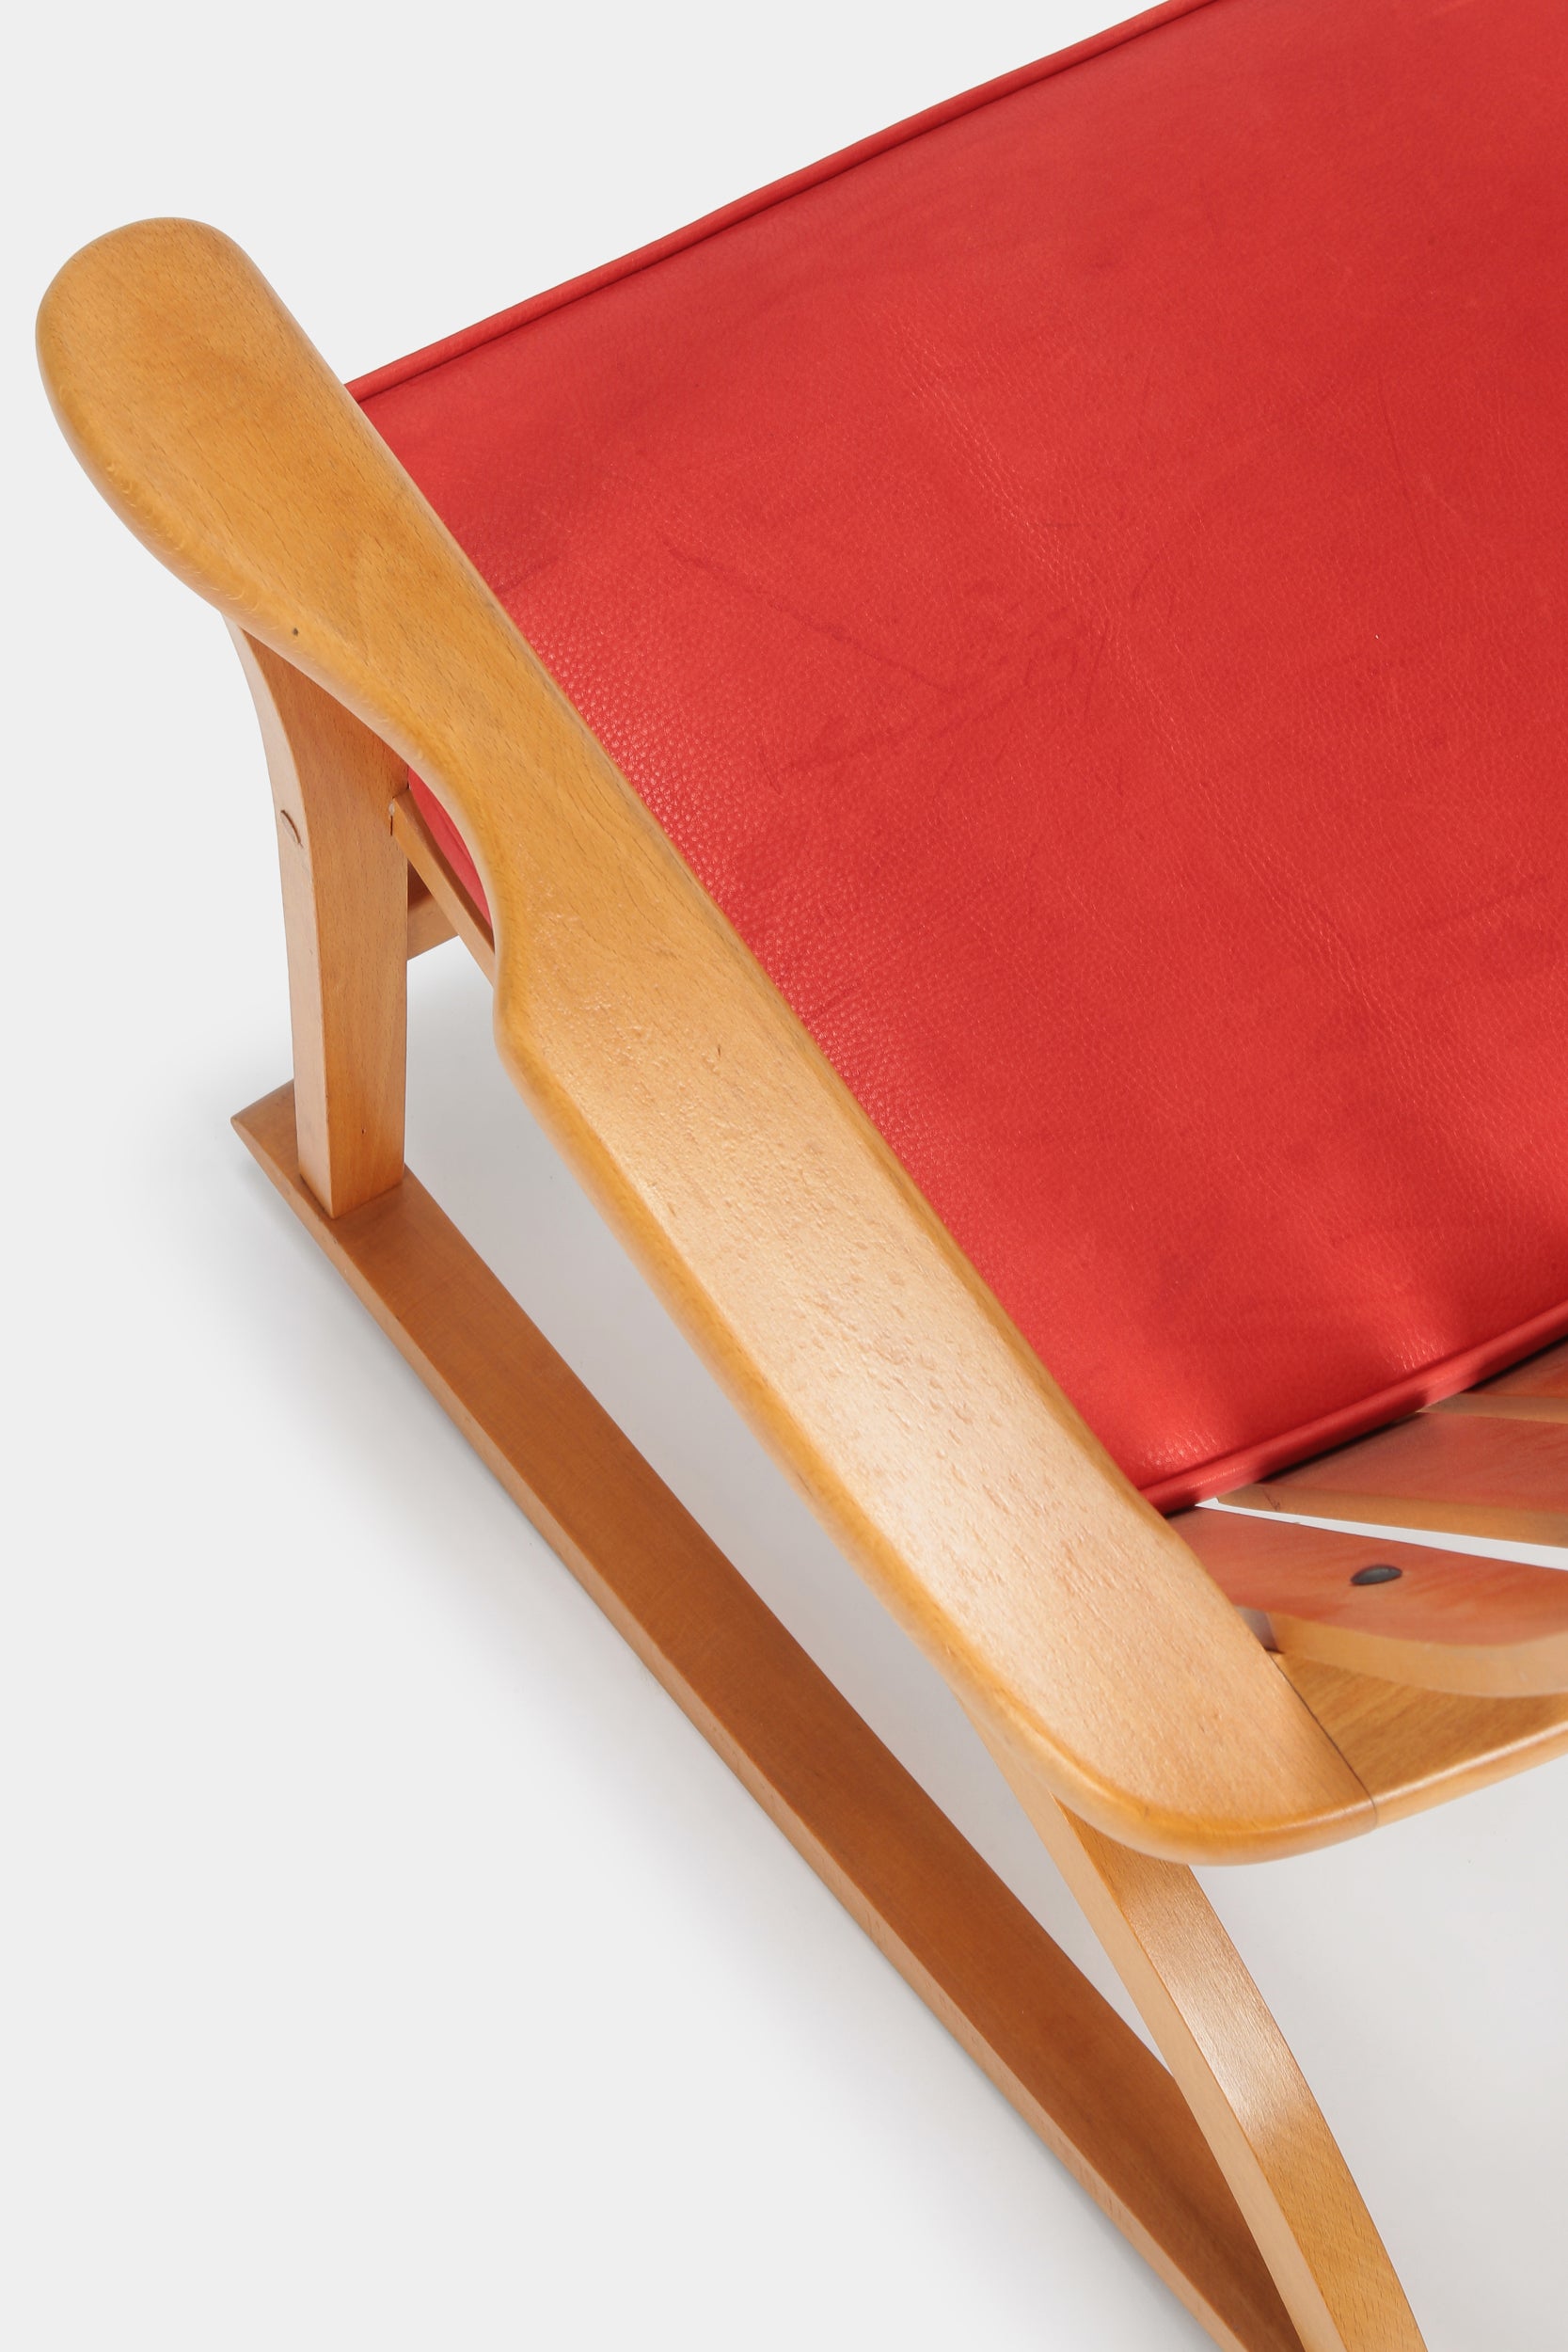 Swedish rocking chair 50' beech with leather cushion